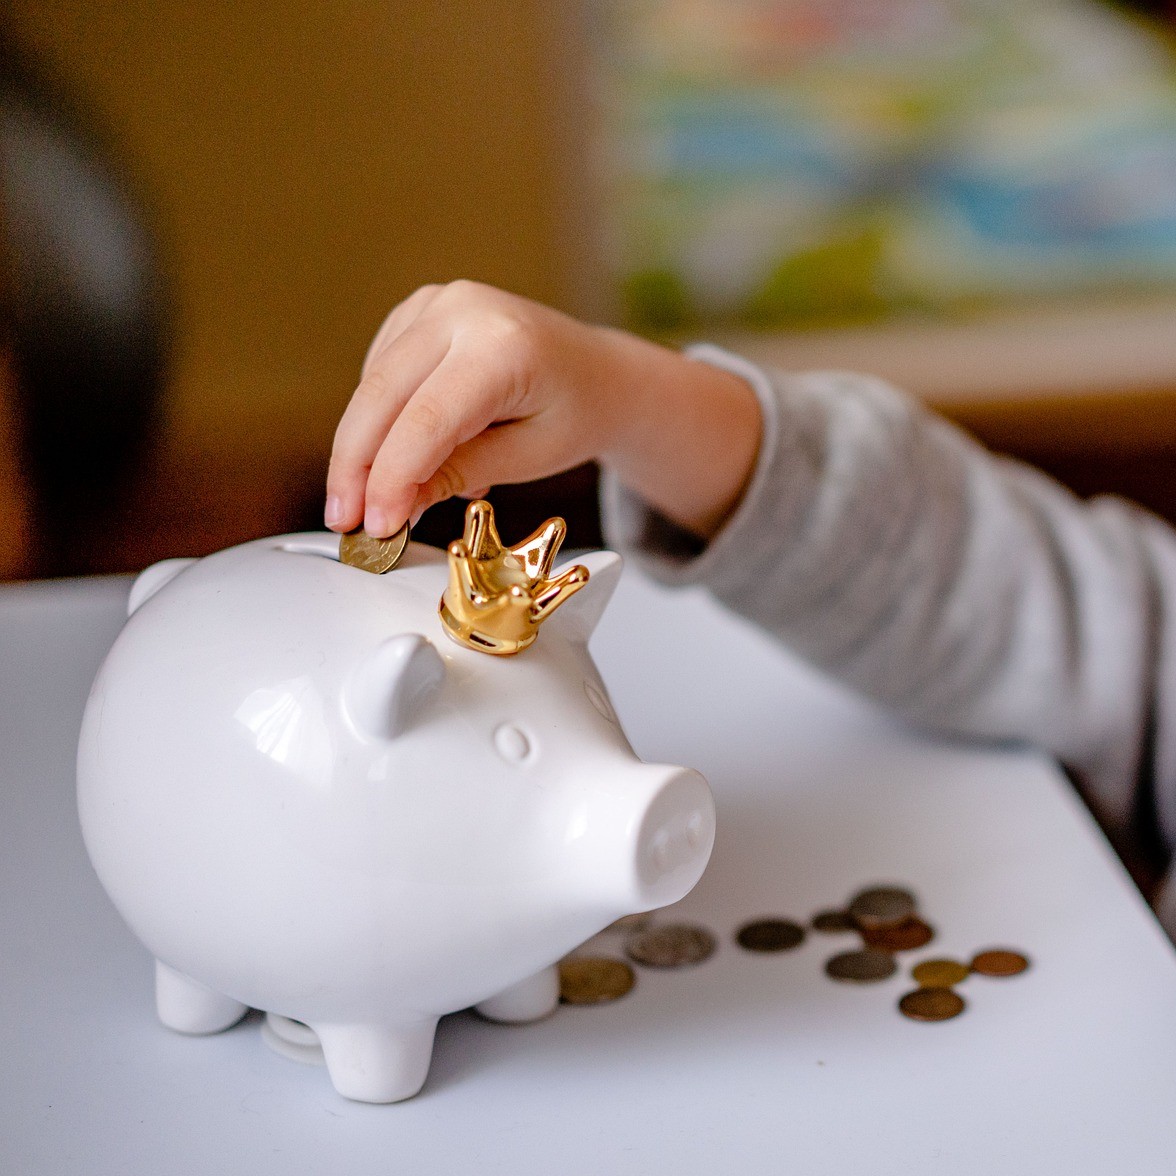 Child's hand putting coin into piggybank